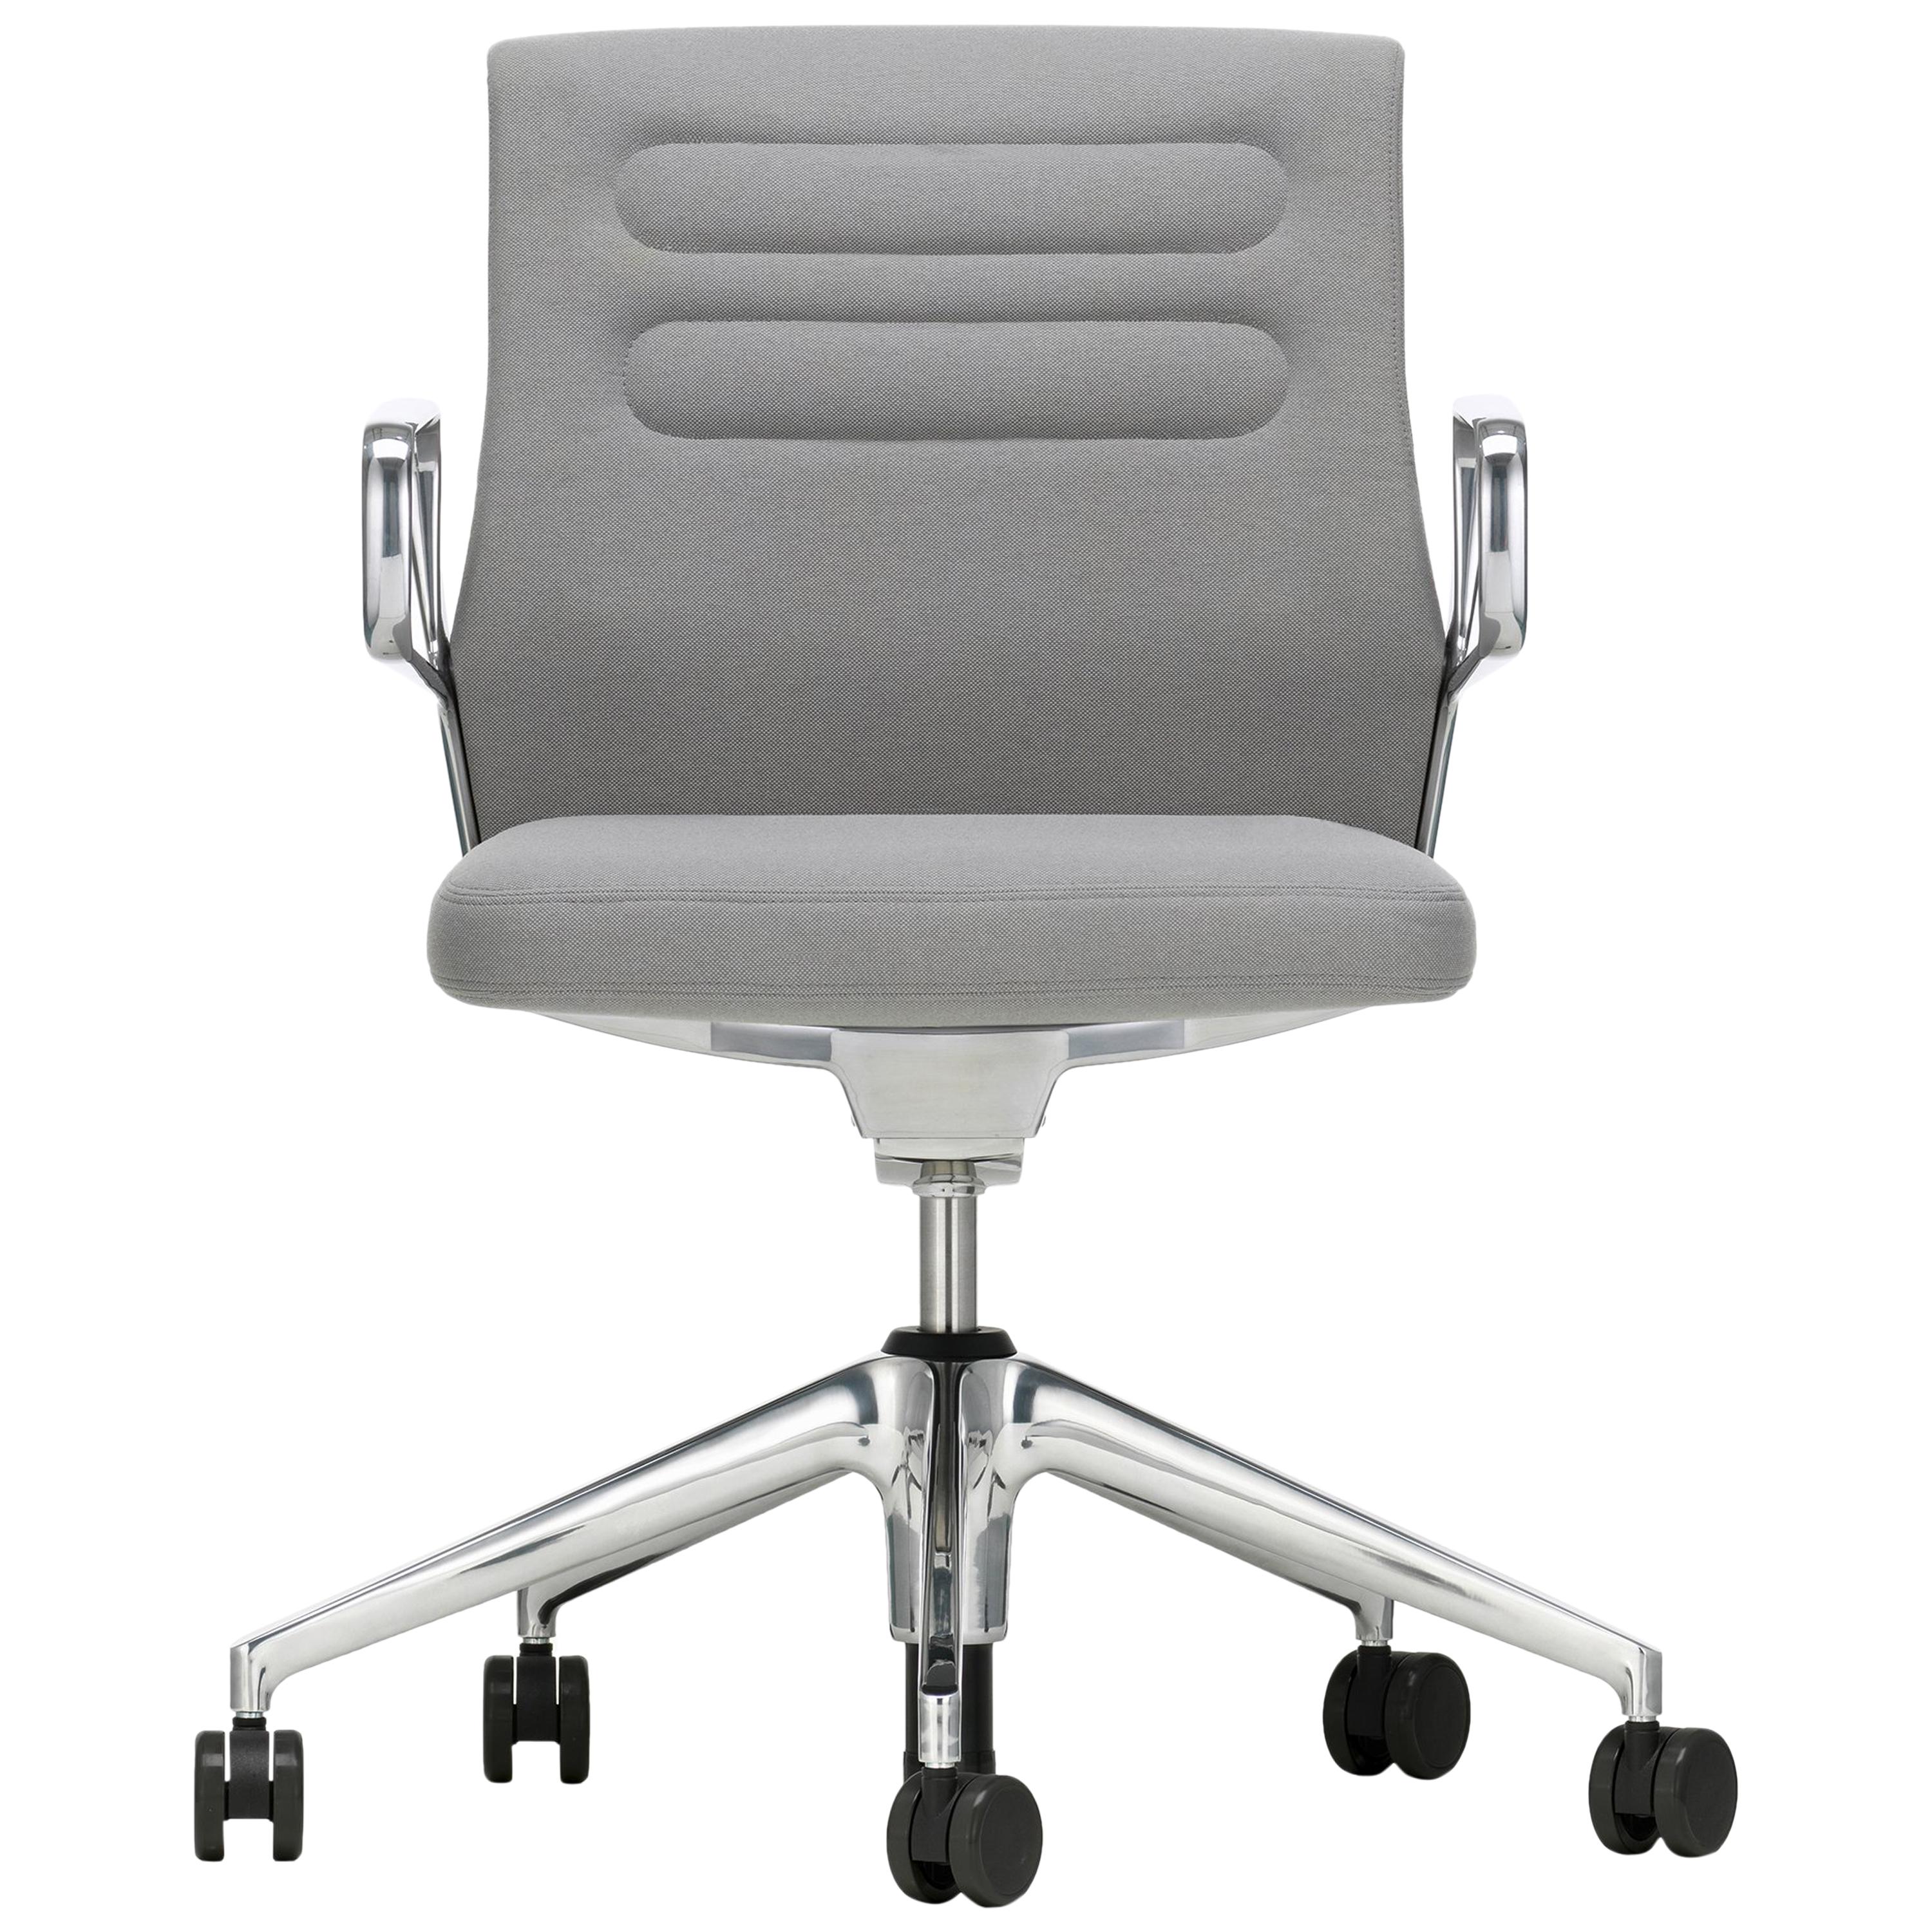 Vitra AC 5 Studio Chair in Light Gray & Sierra Gray Plano by Antonio Citterio For Sale